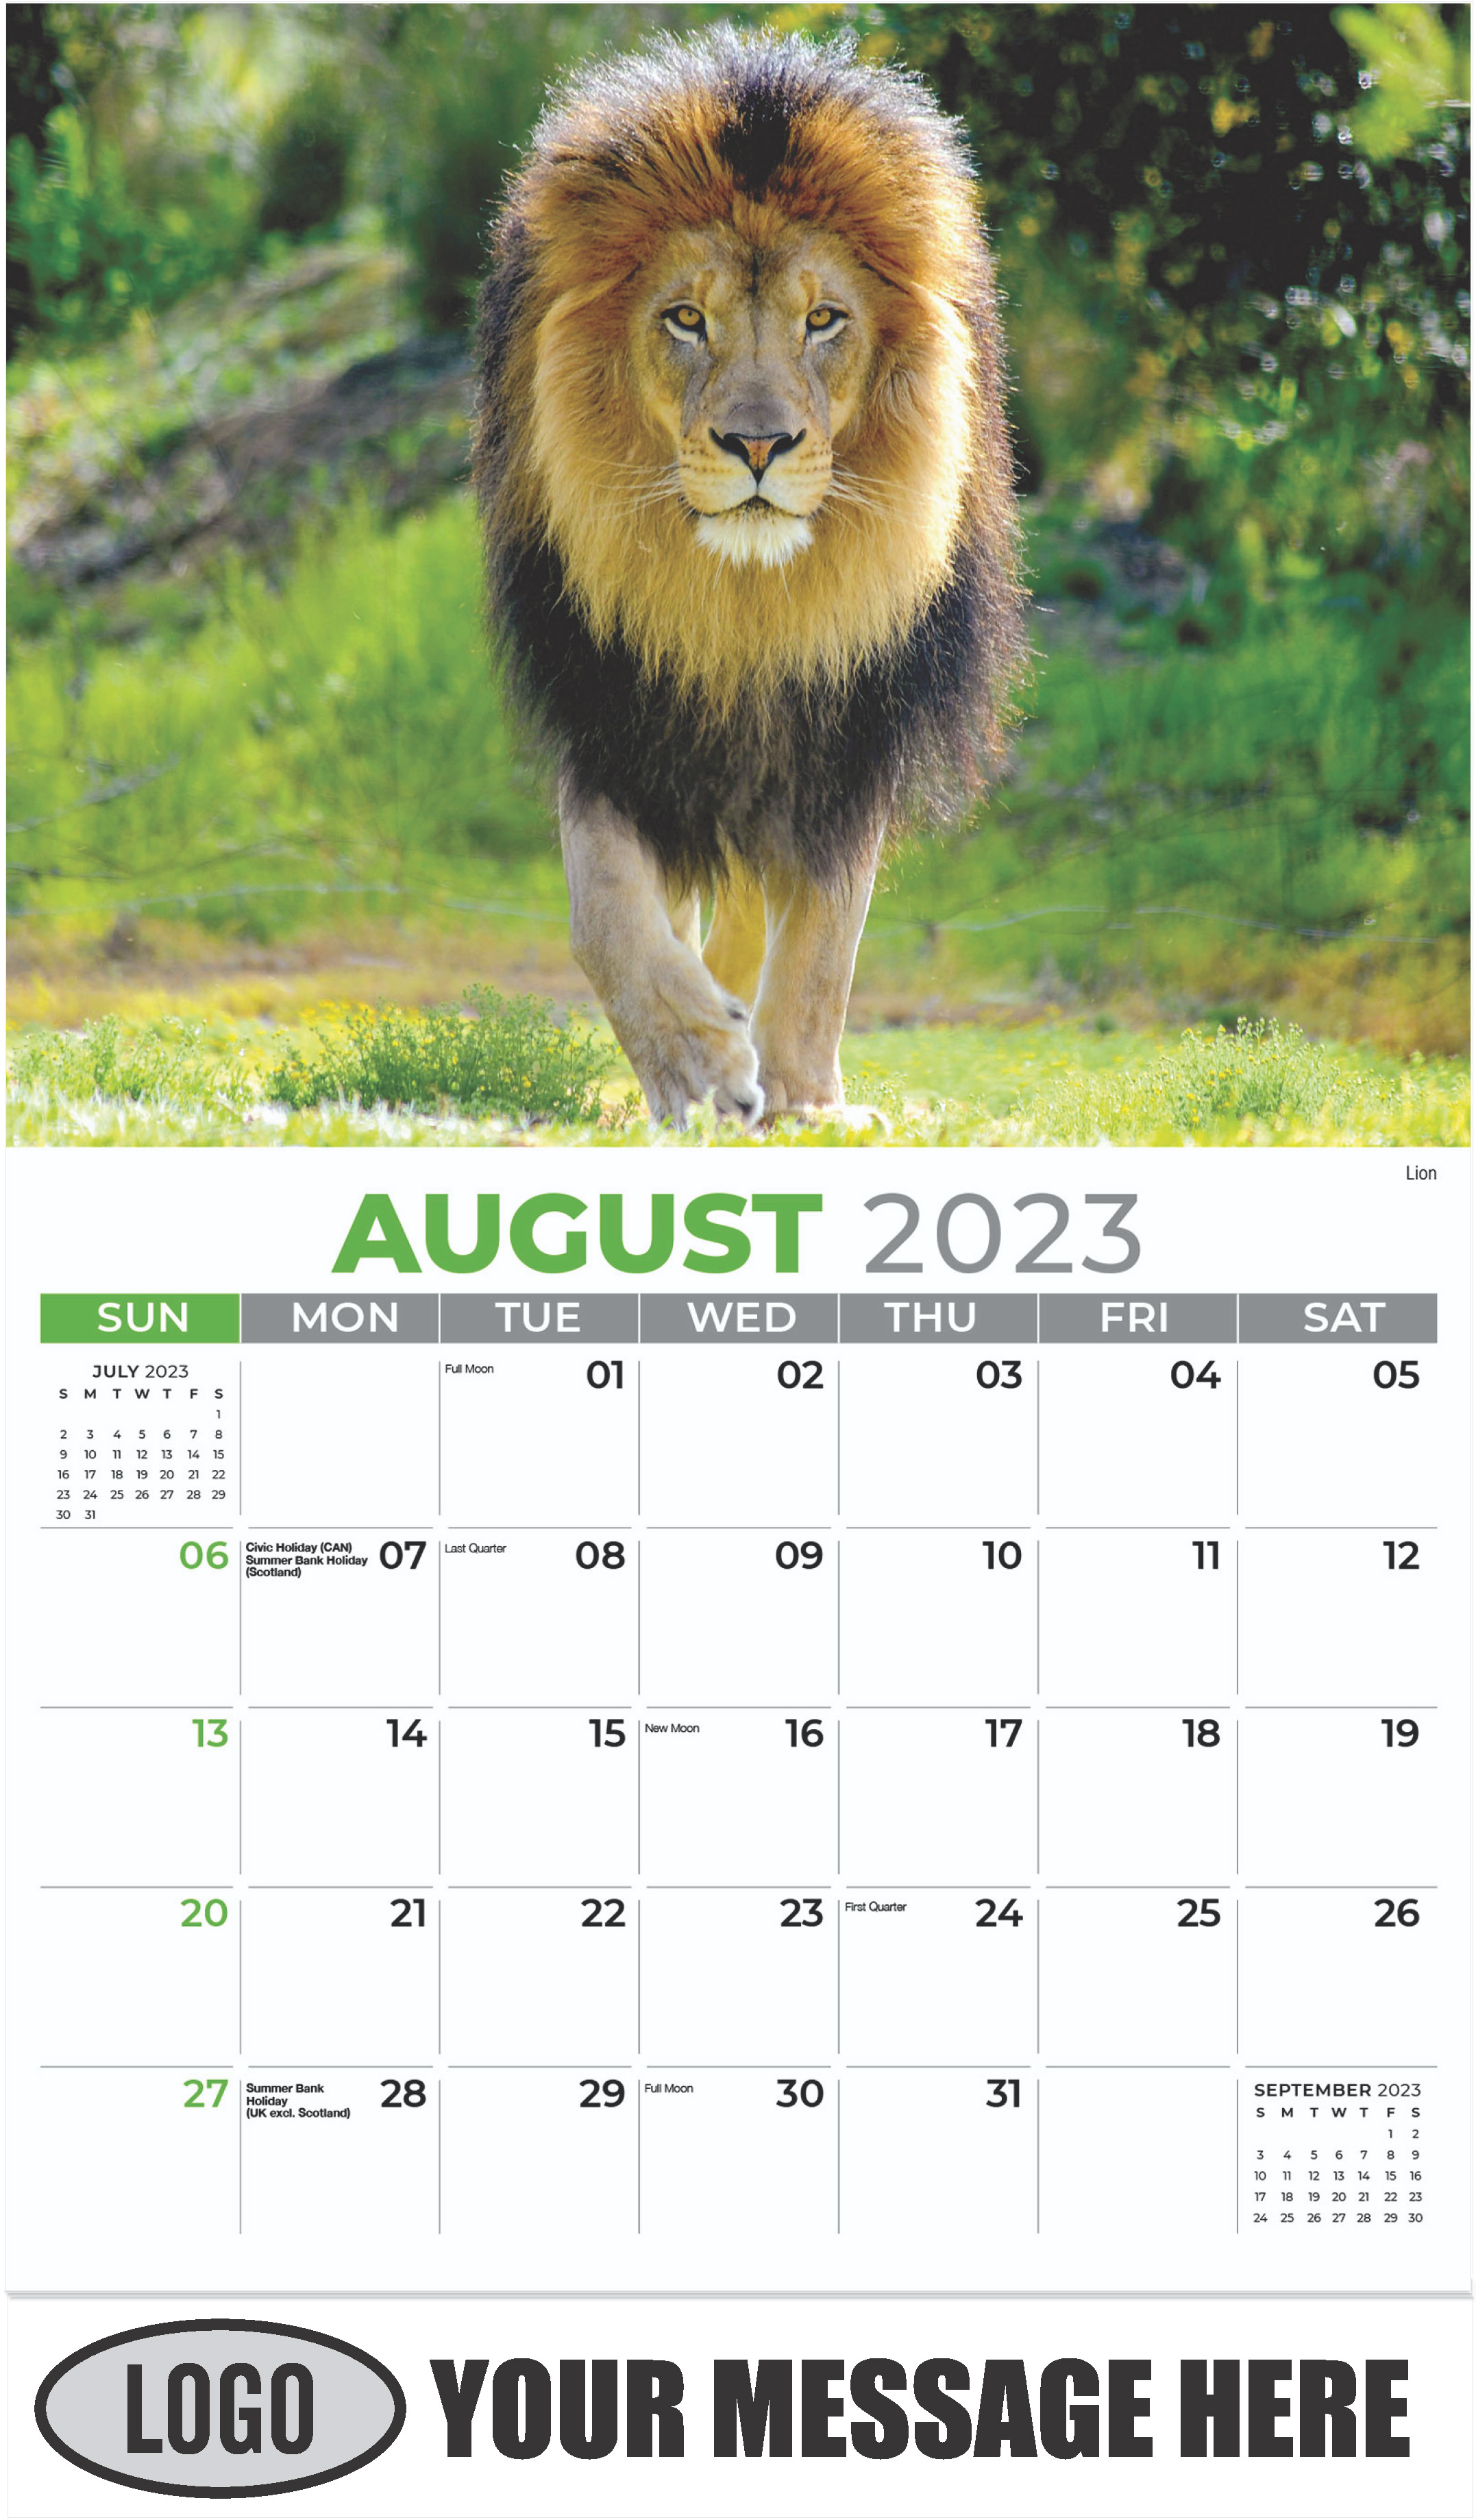 Lion - August - International Wildlife 2023 Promotional Calendar